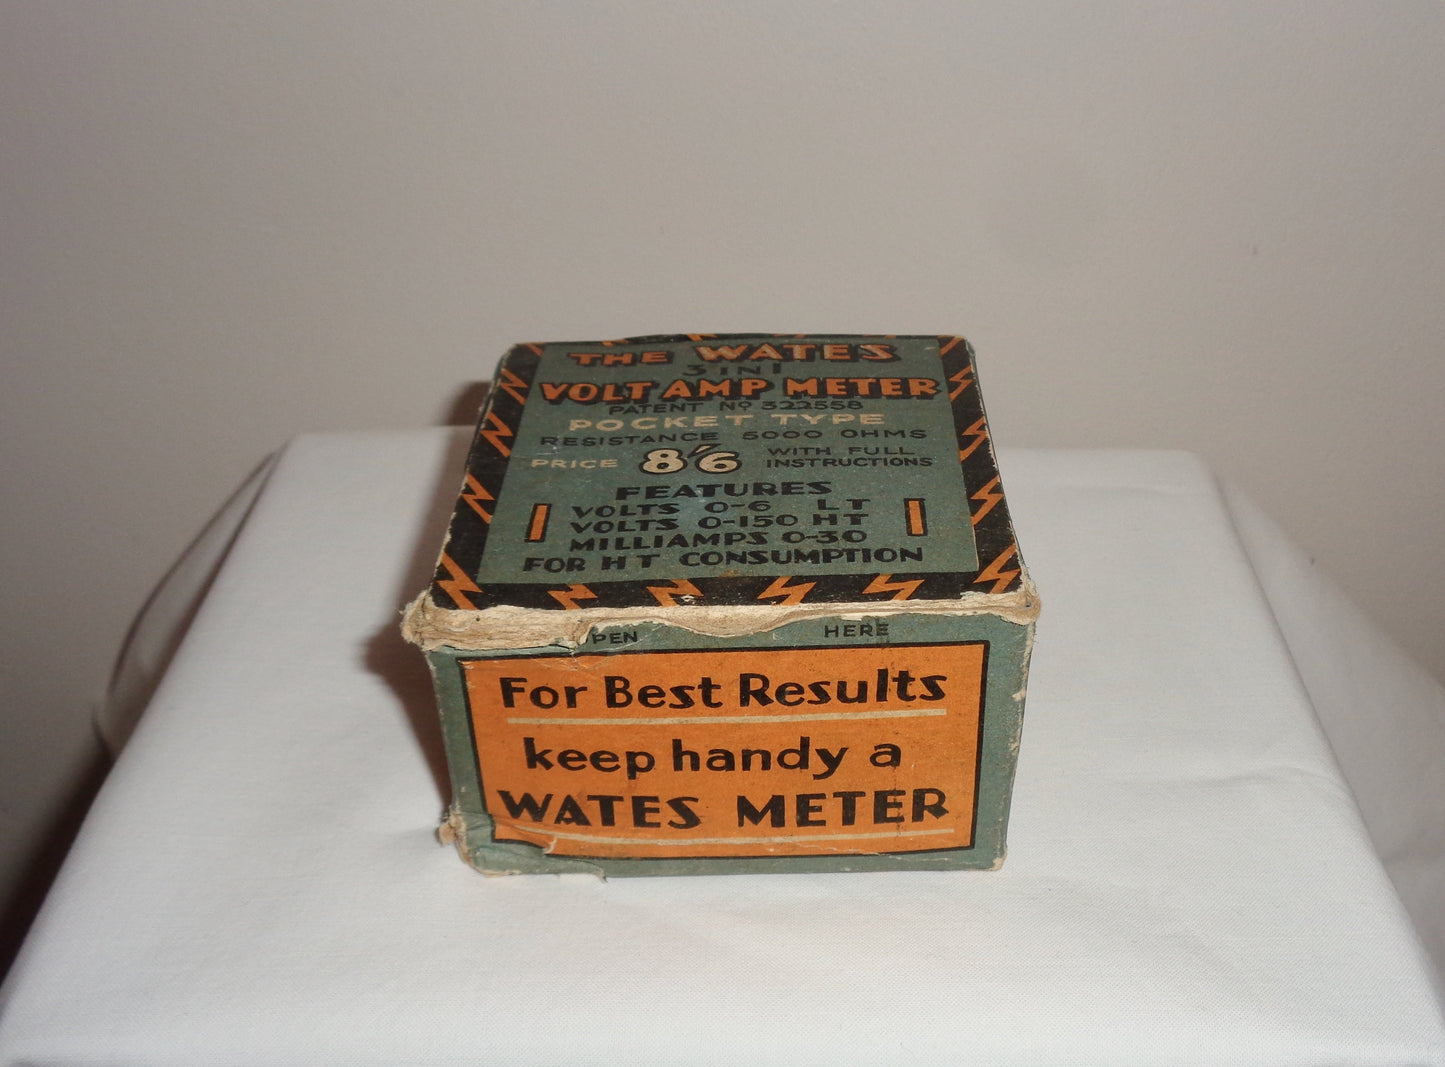 Vintage Wates 3 in 1 Pocket Volt Amp meter With A Resistance Of 5000 Ohms